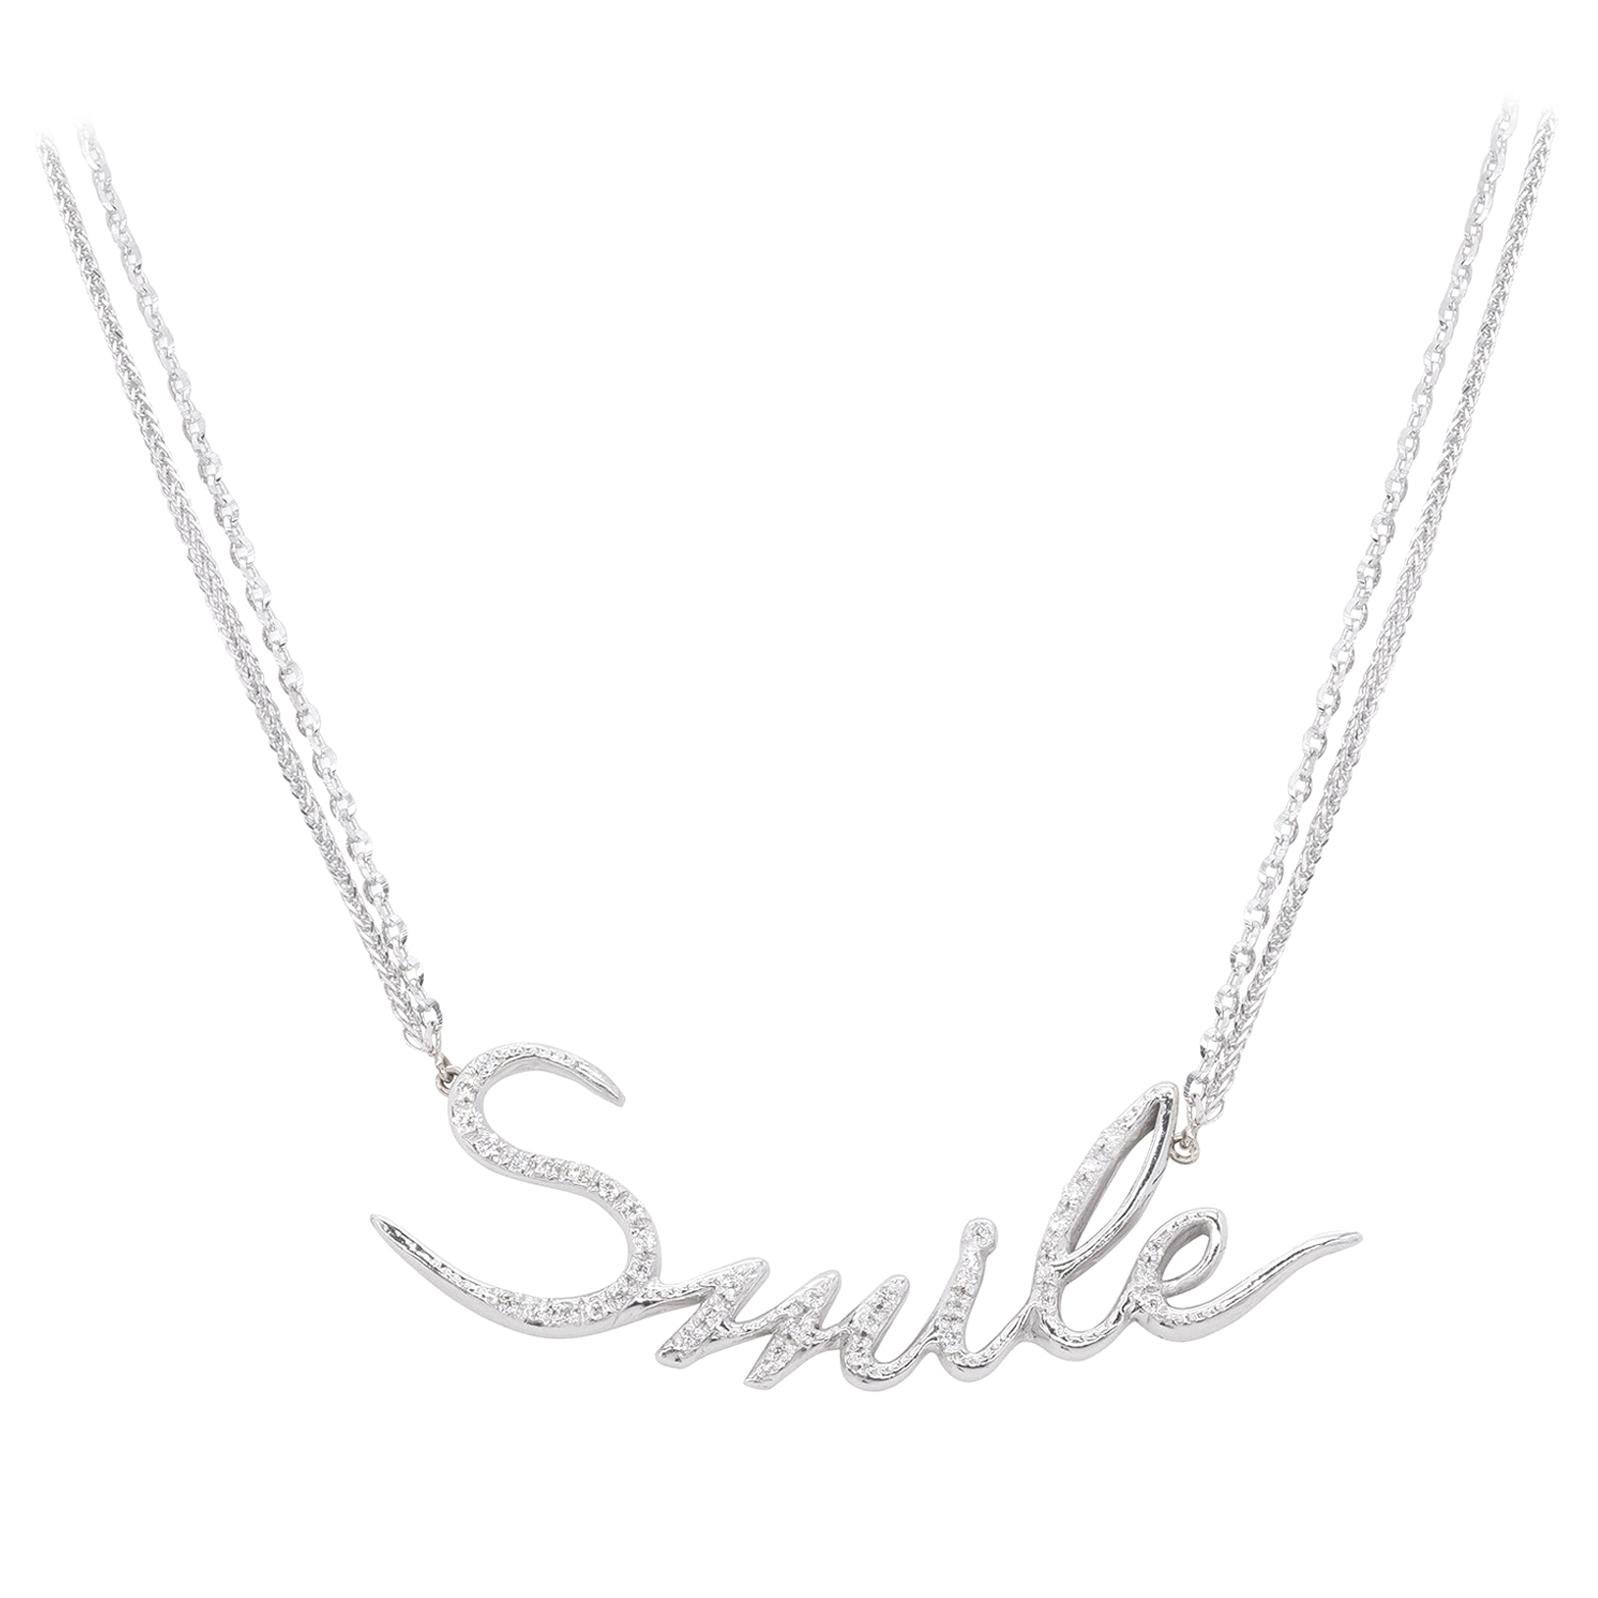 La Vie est Belle Collection, "Smile" Necklace in White Gold and Diamonds For Sale